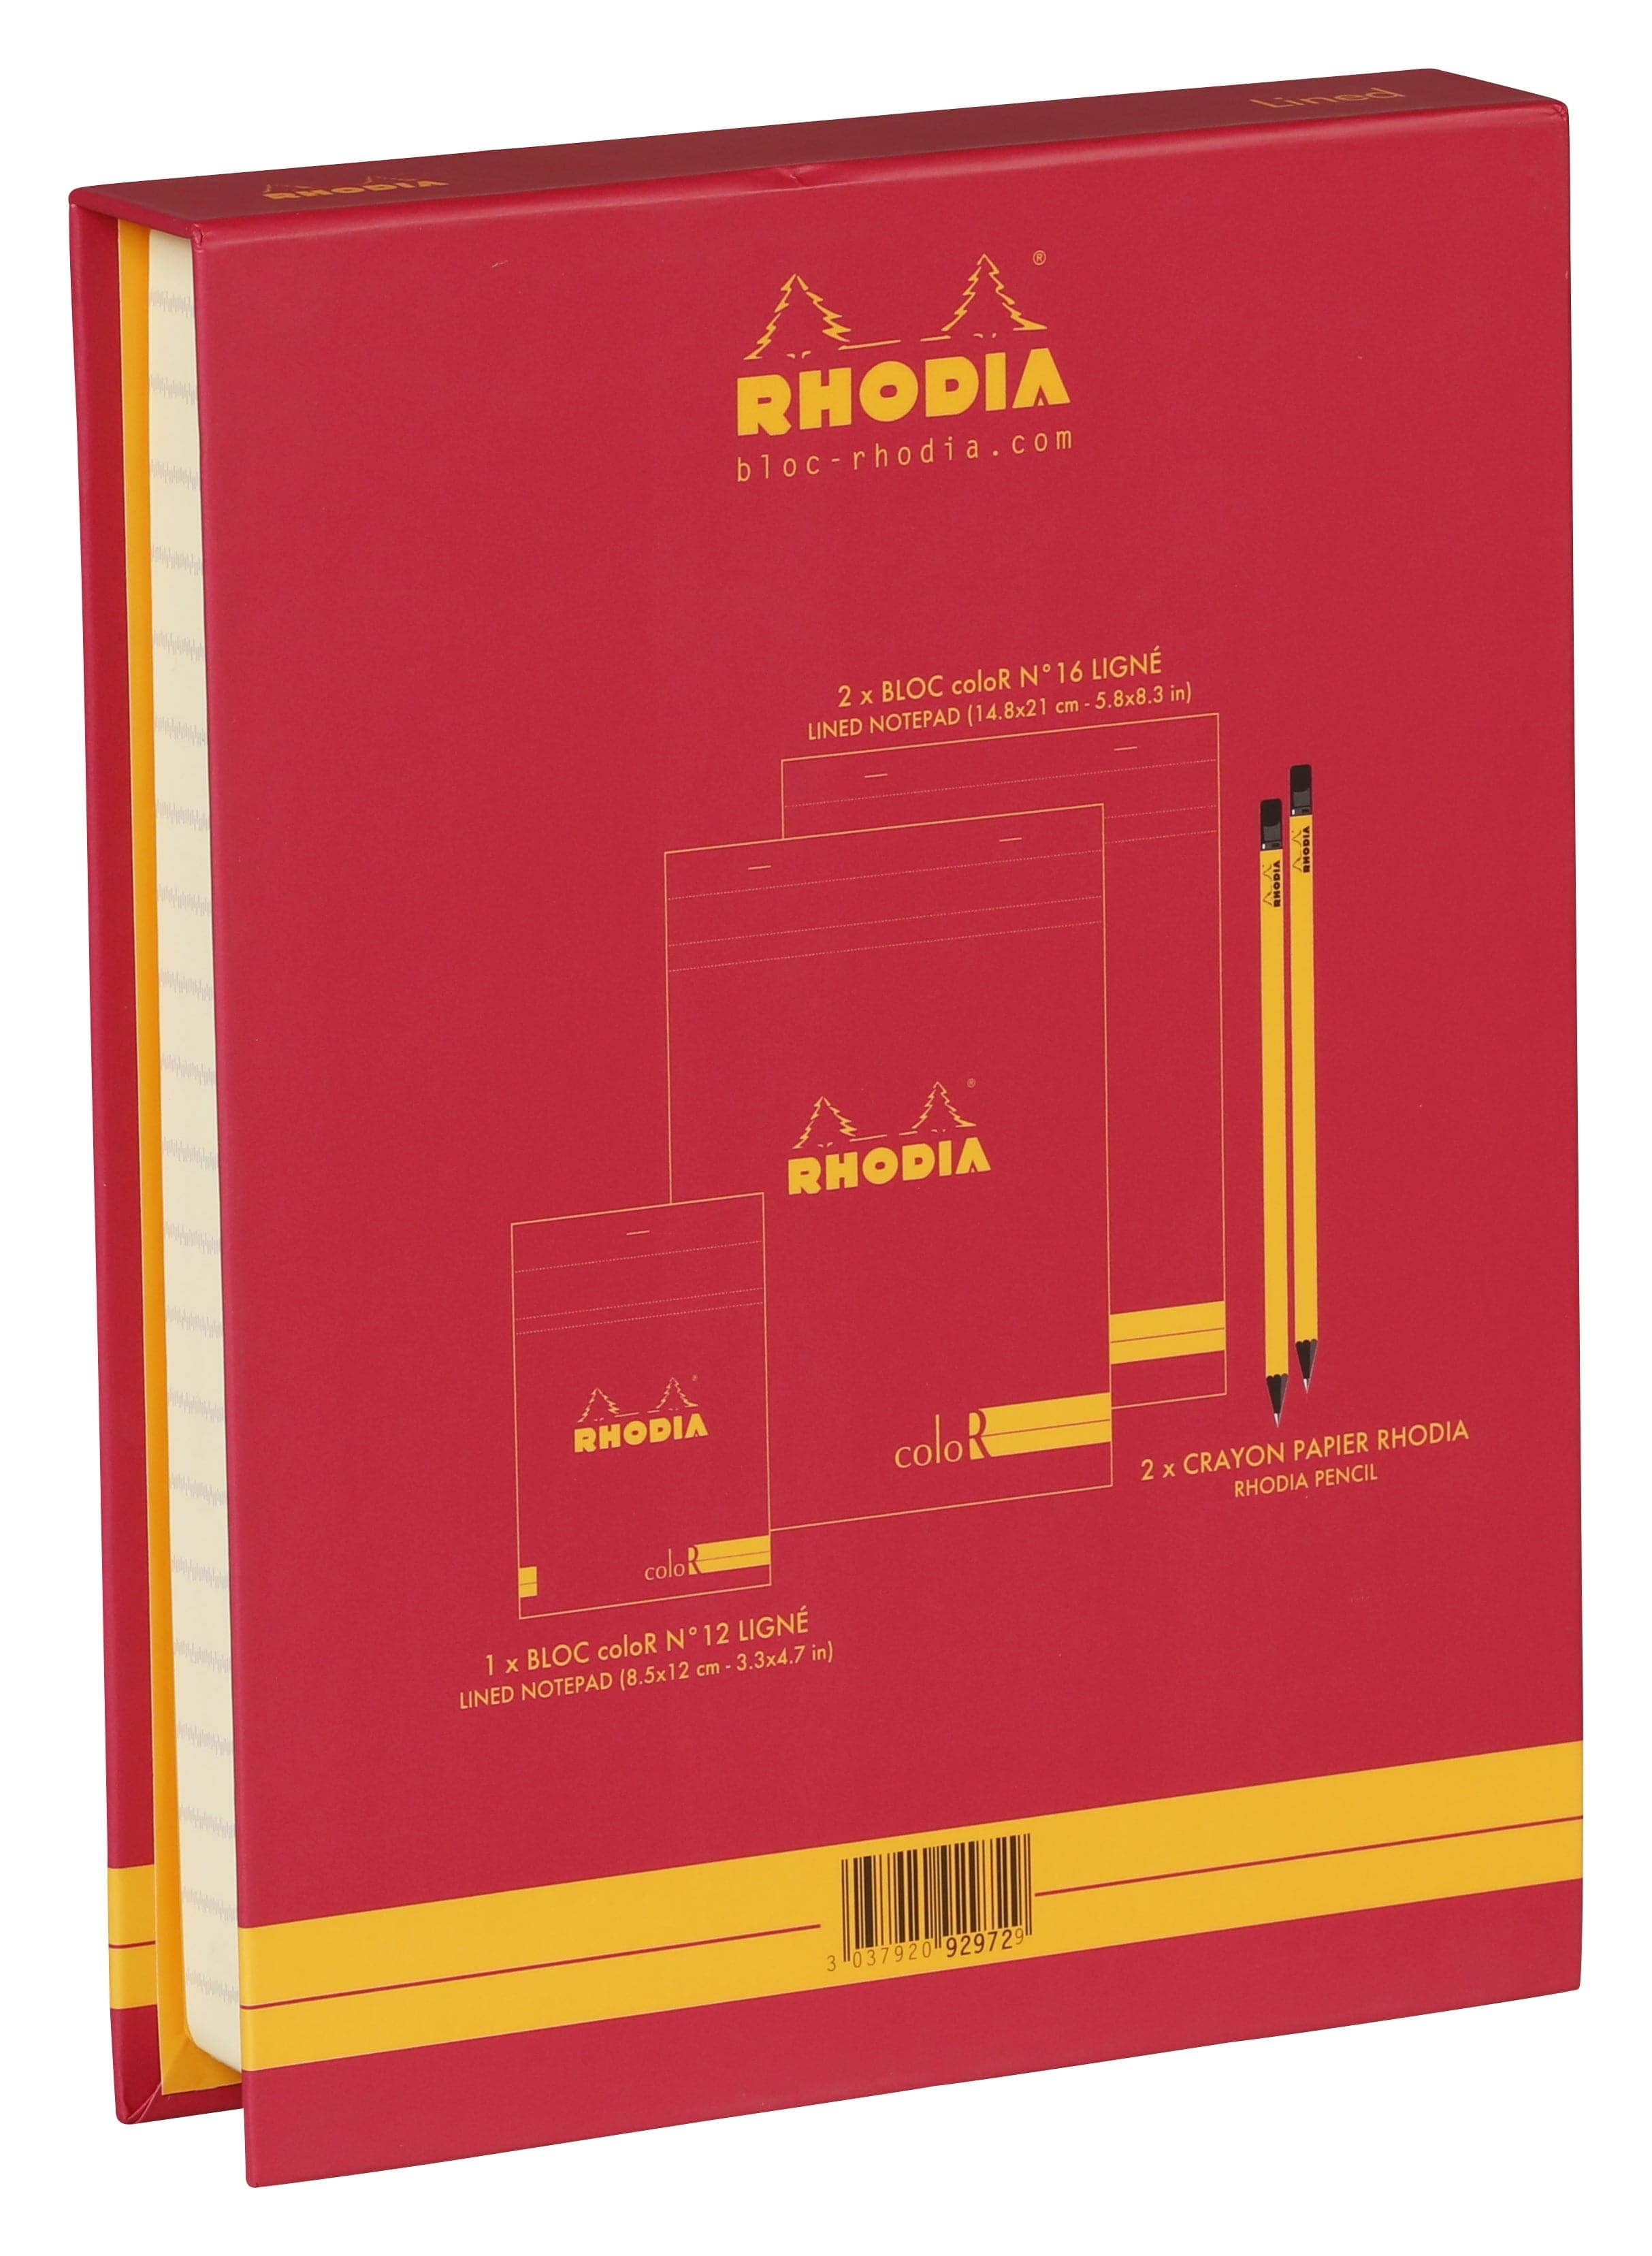 RHODIA BOX LINED NOTEPAD RHODIA PENCIL library.umsida.ac.id